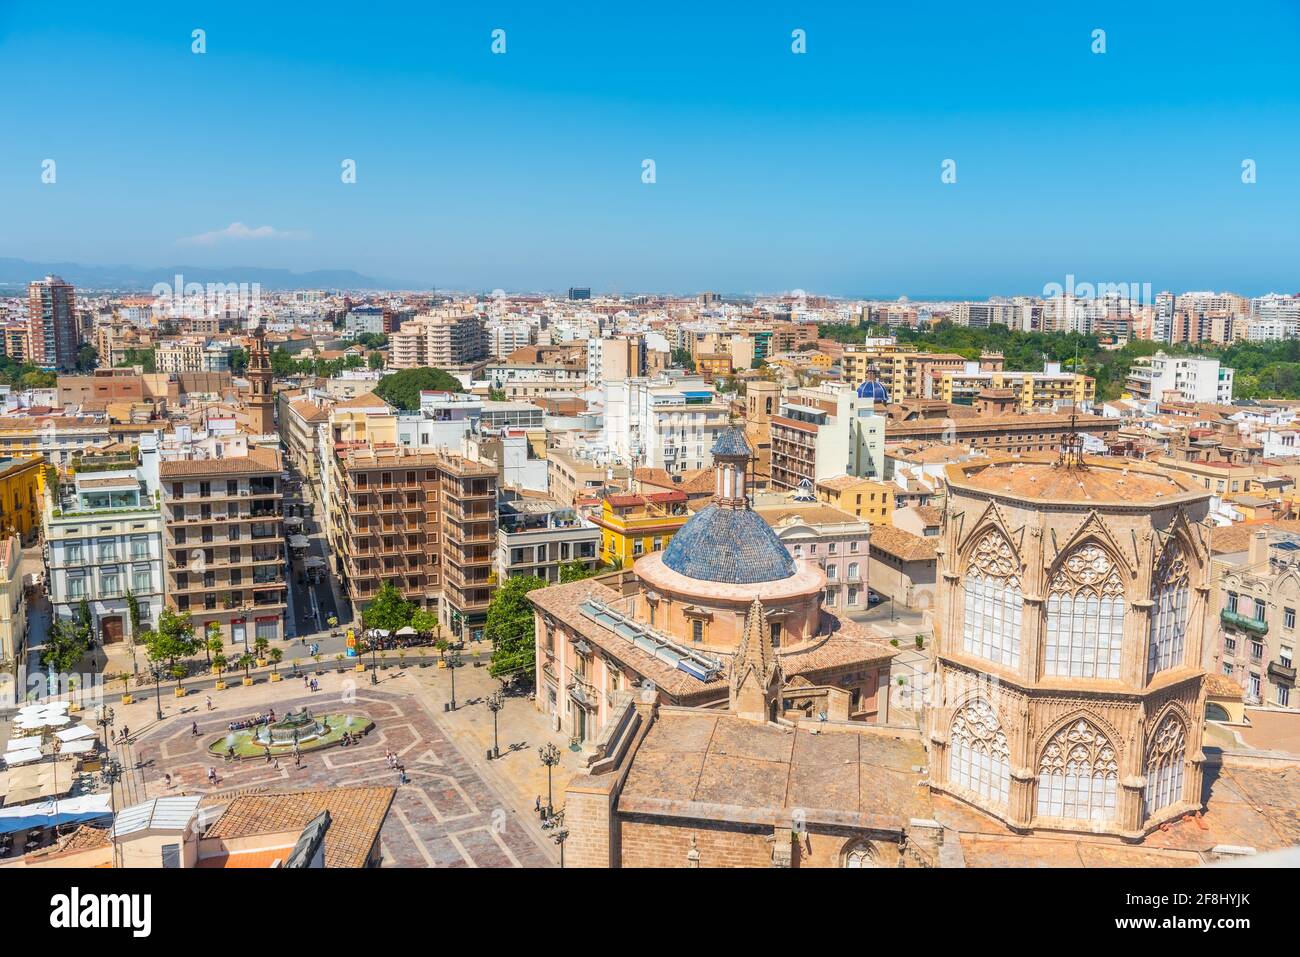 Aerial view of Plaza de la Virgen in Valencia, Spain Stock Photo